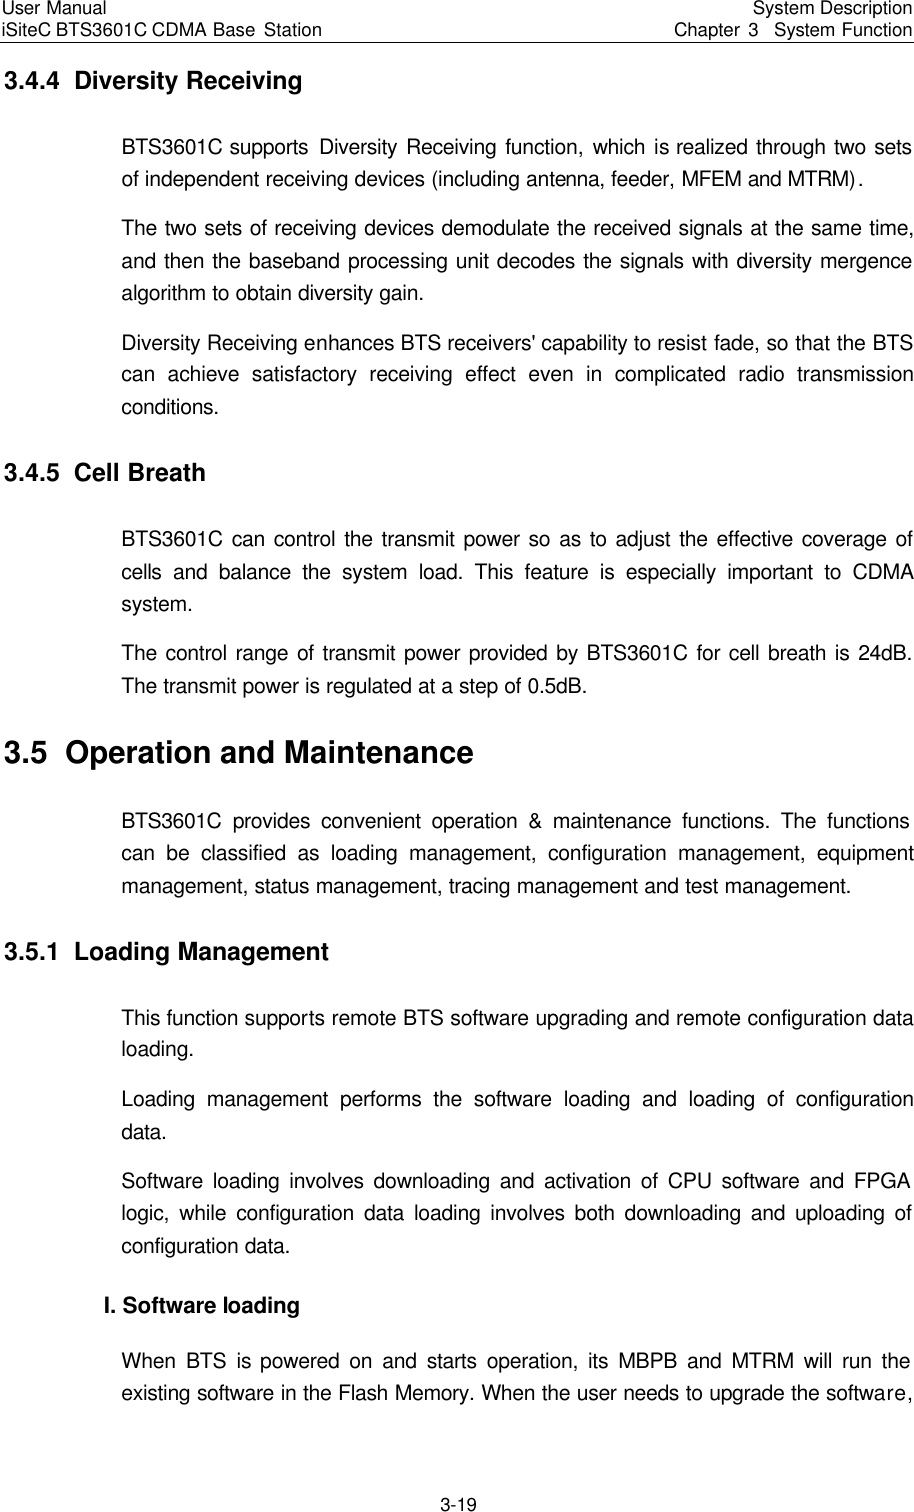 Page 41 of Huawei Technologies BTS3601C-800 CDMA Base Station User Manual 3